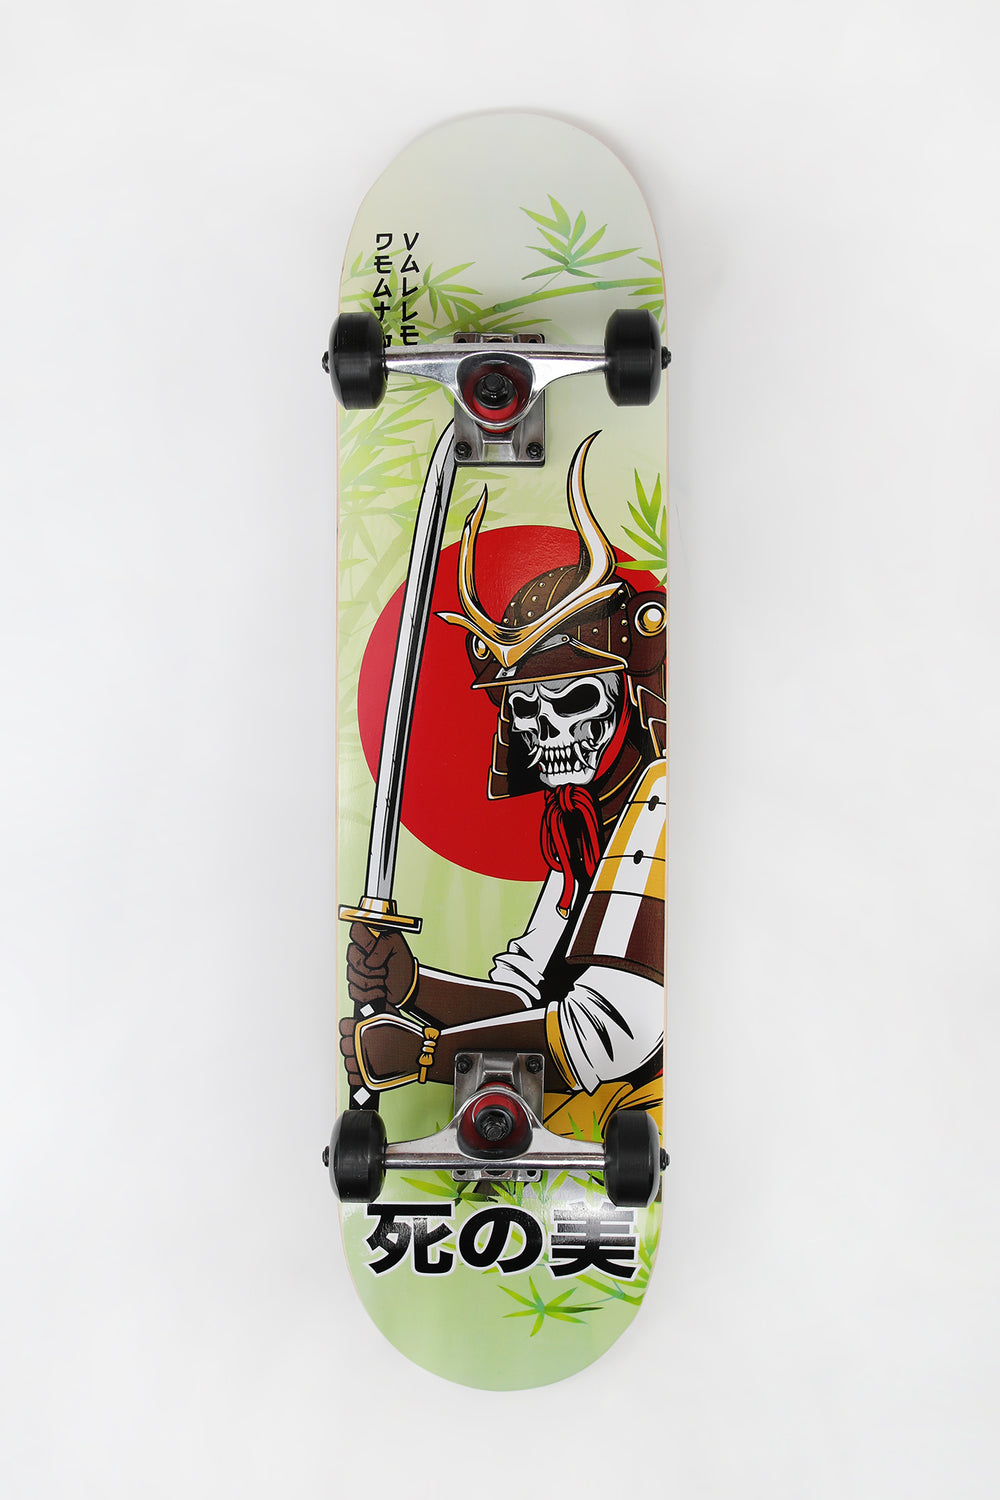 Death Valley Samurai Skateboard 7.75